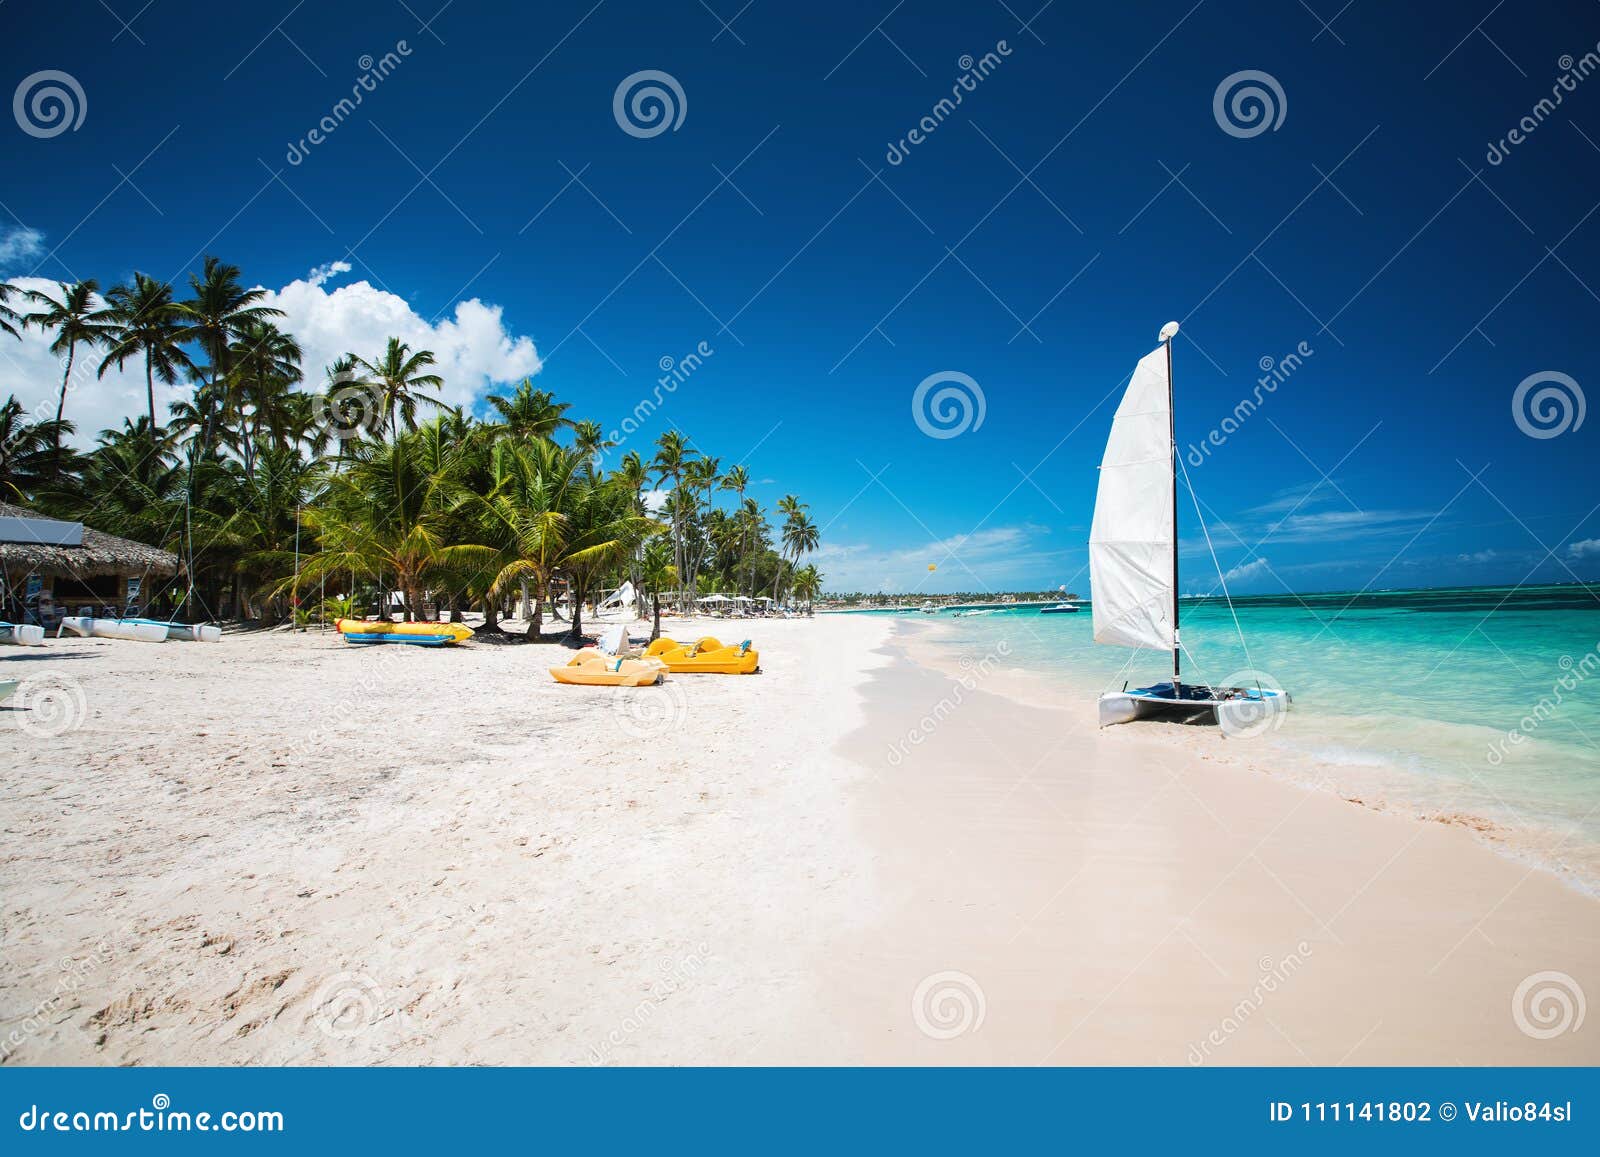 palm and tropical beach in punta cana, dominican republic